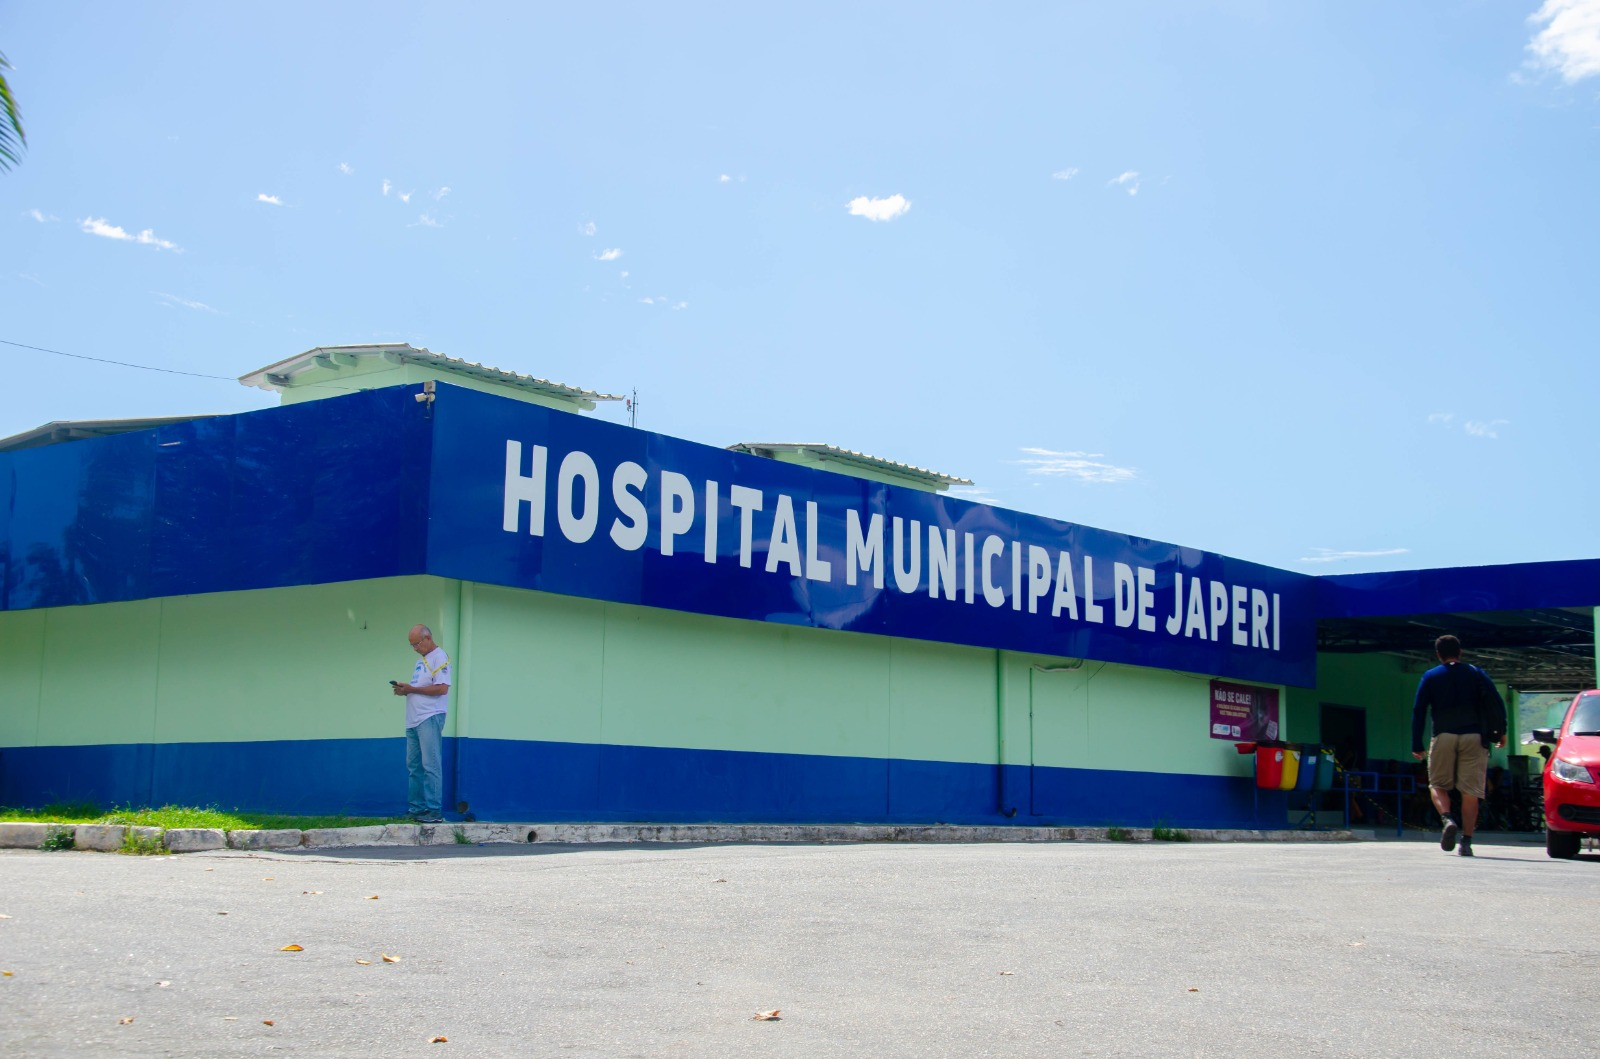 hospital municipal de japeri